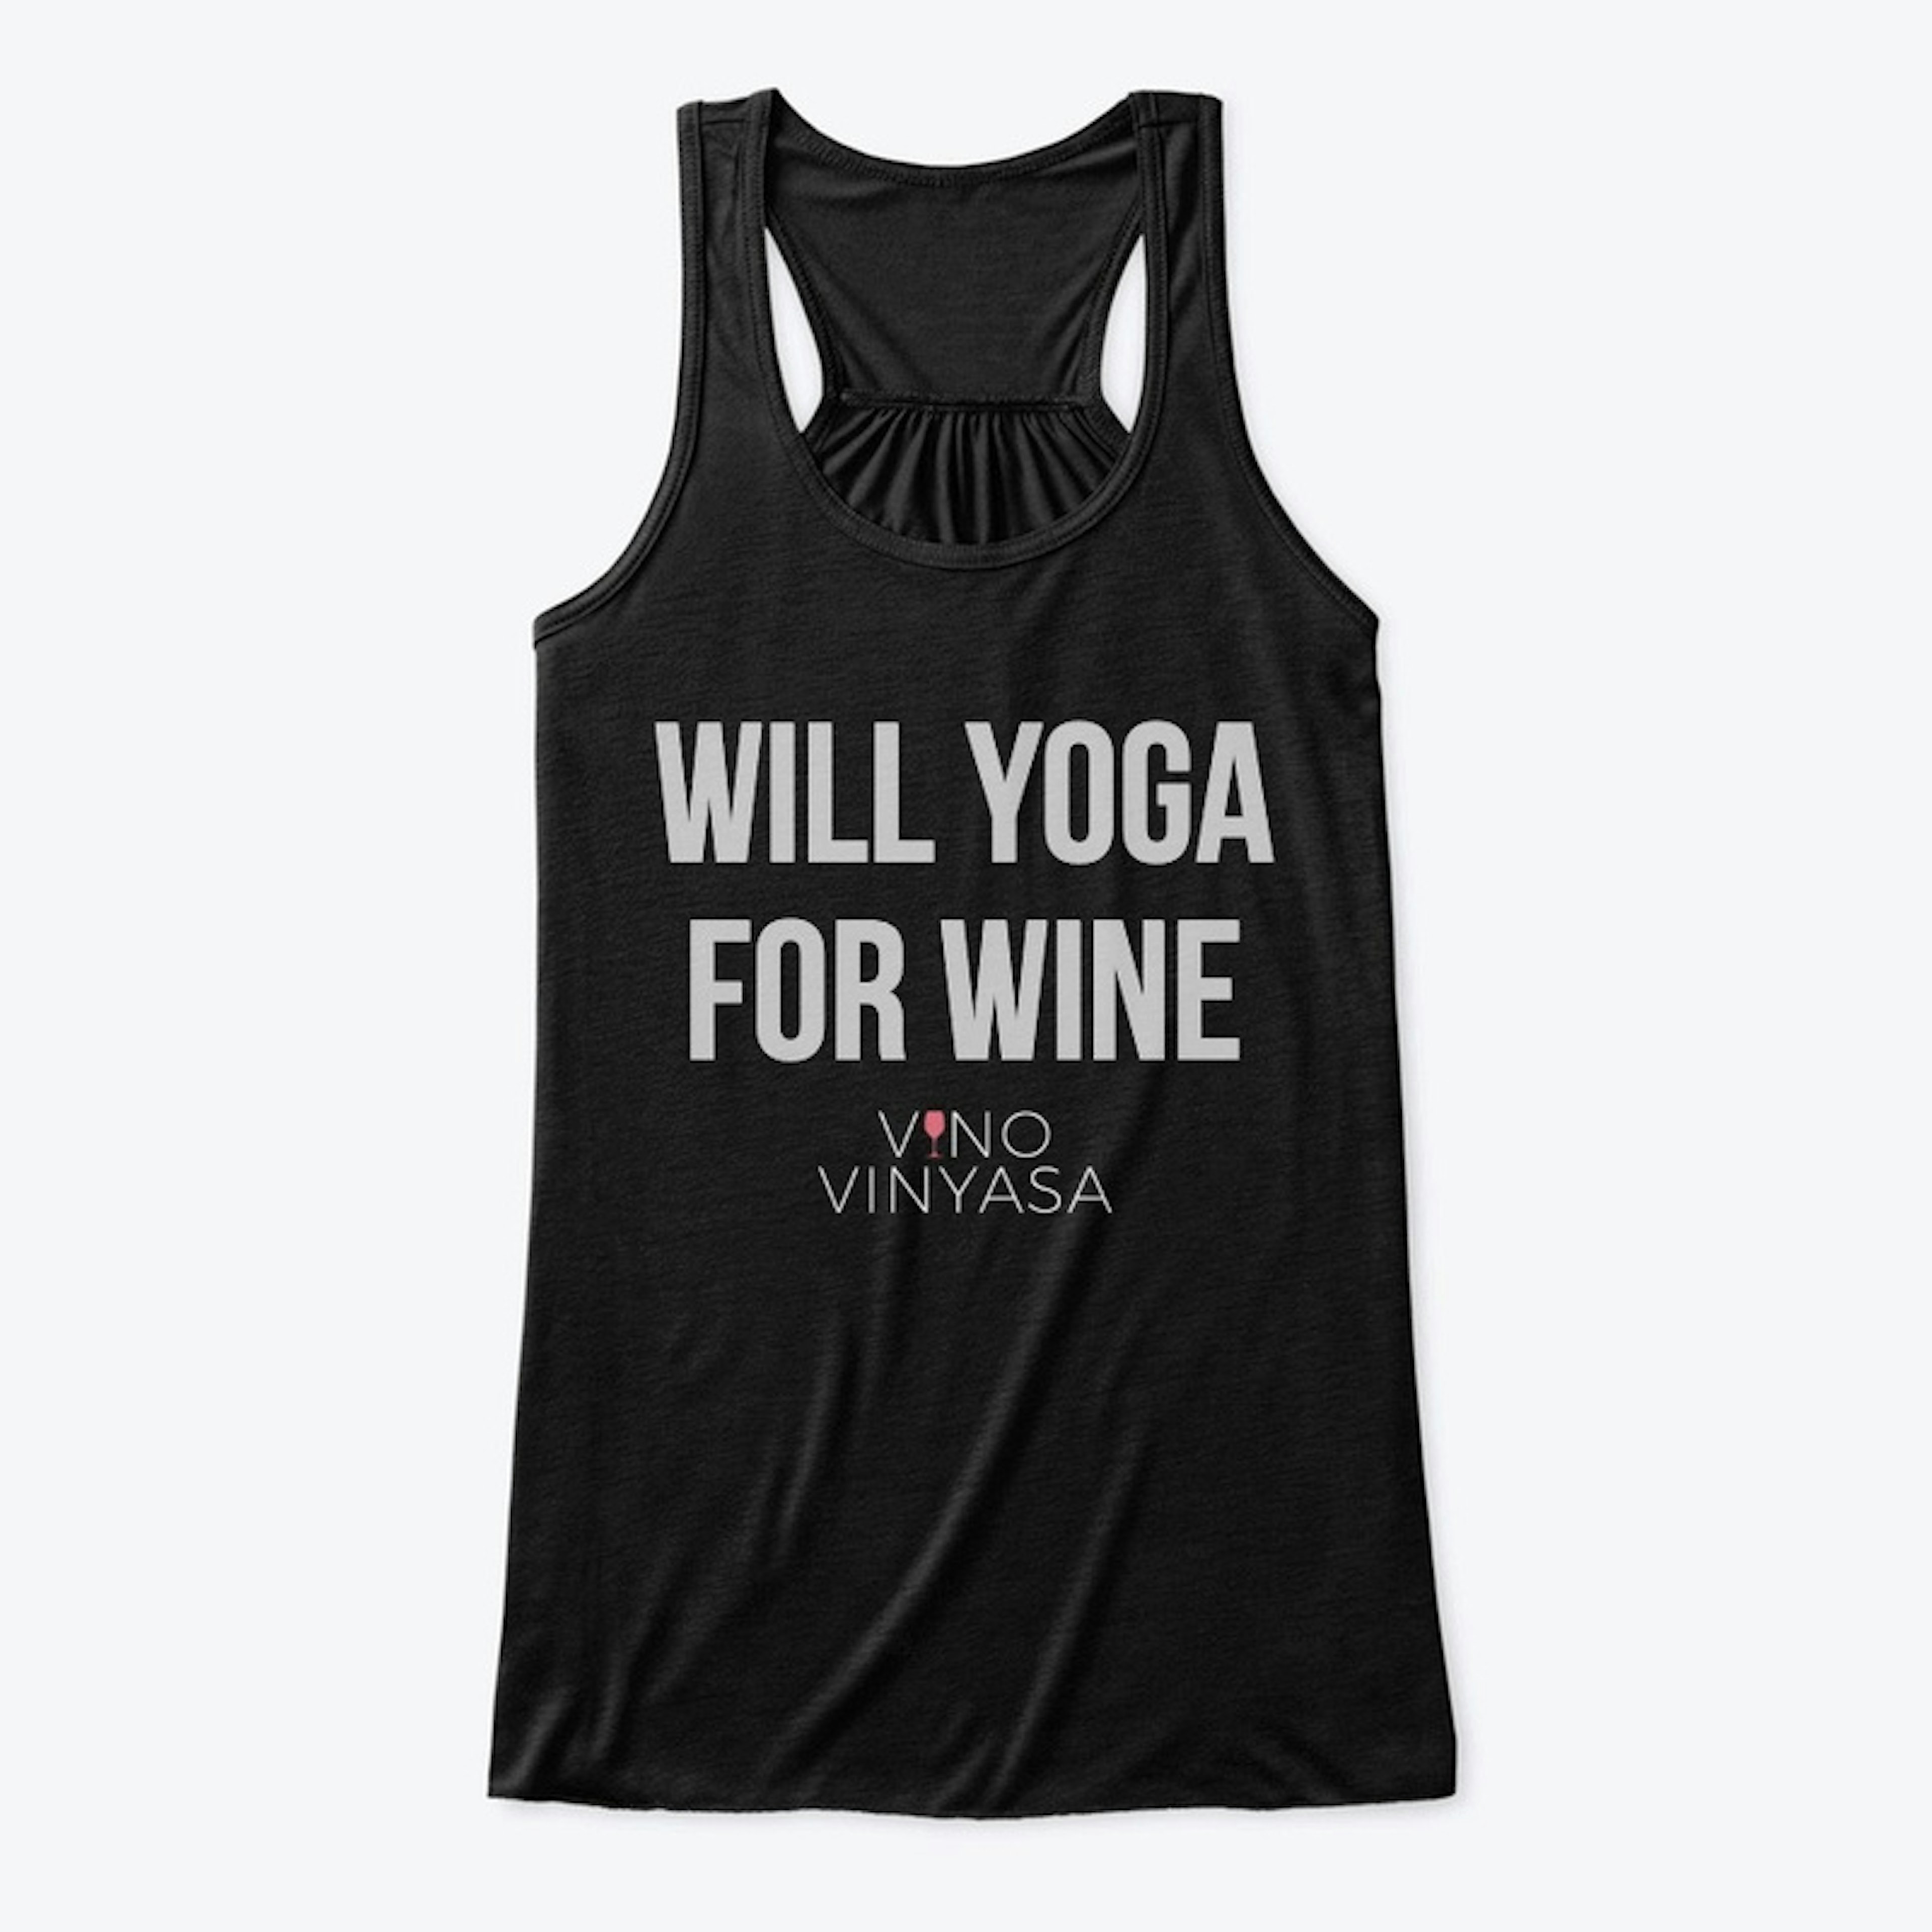 Will Yoga for Wine - Black